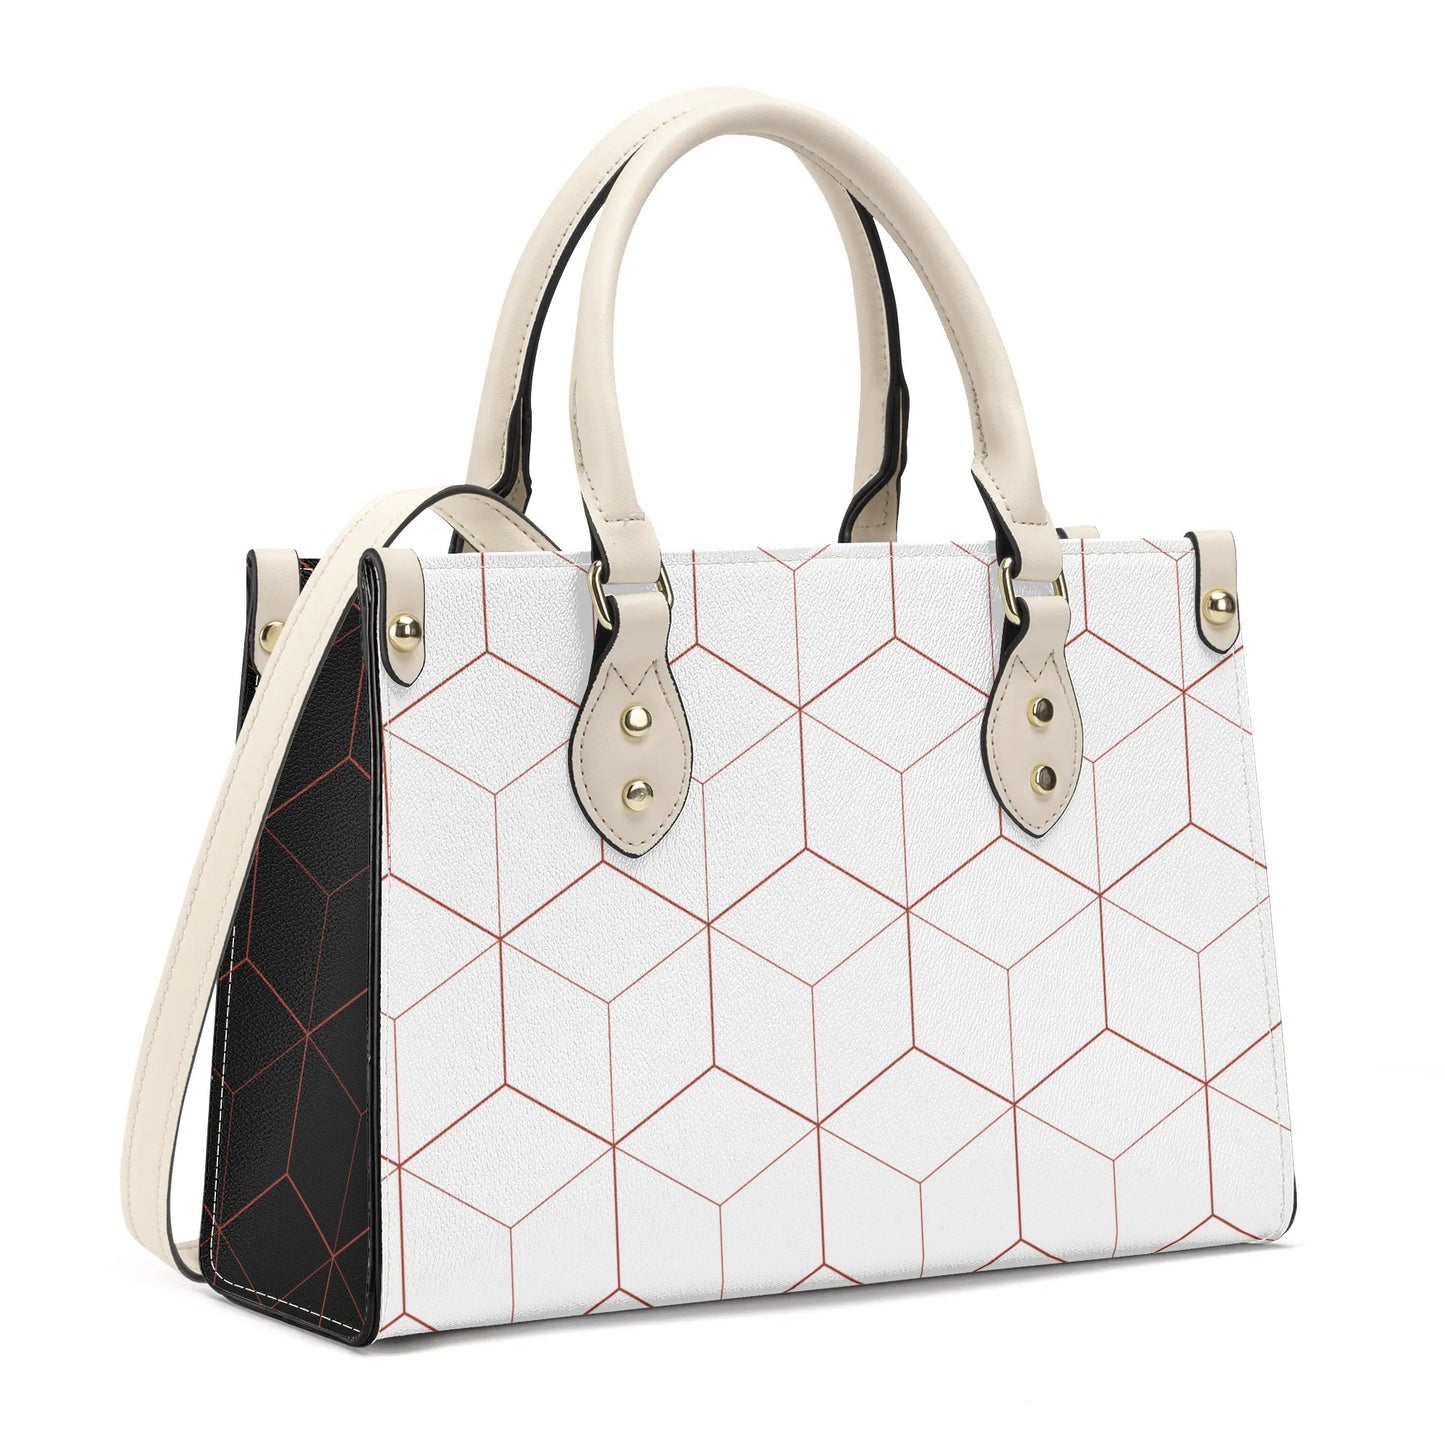 DuGamii Luxury Womens Black and White PU Handbag With Shoulder Strap